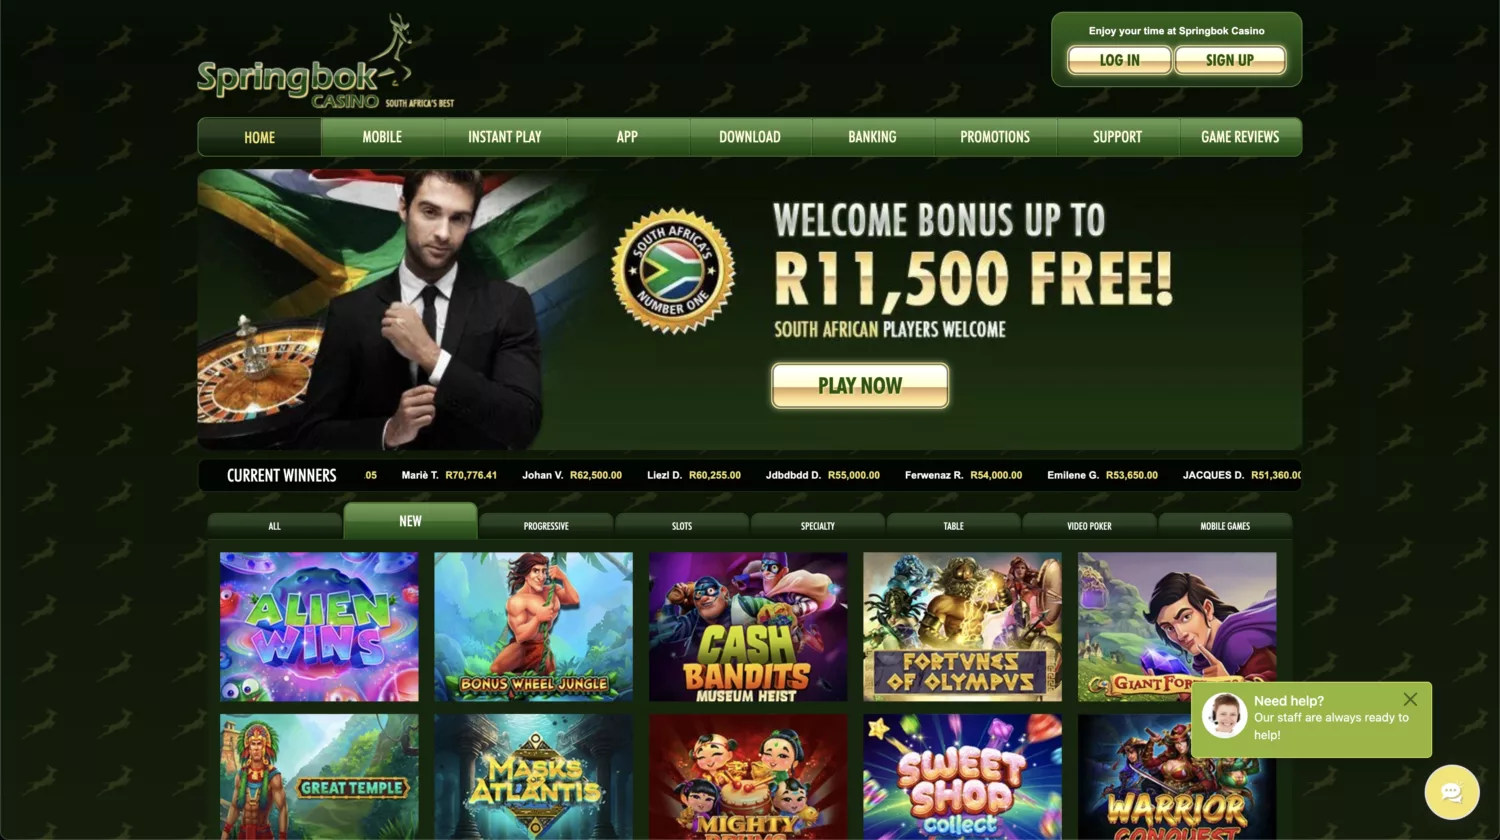 Springbok casino homepage screenshot